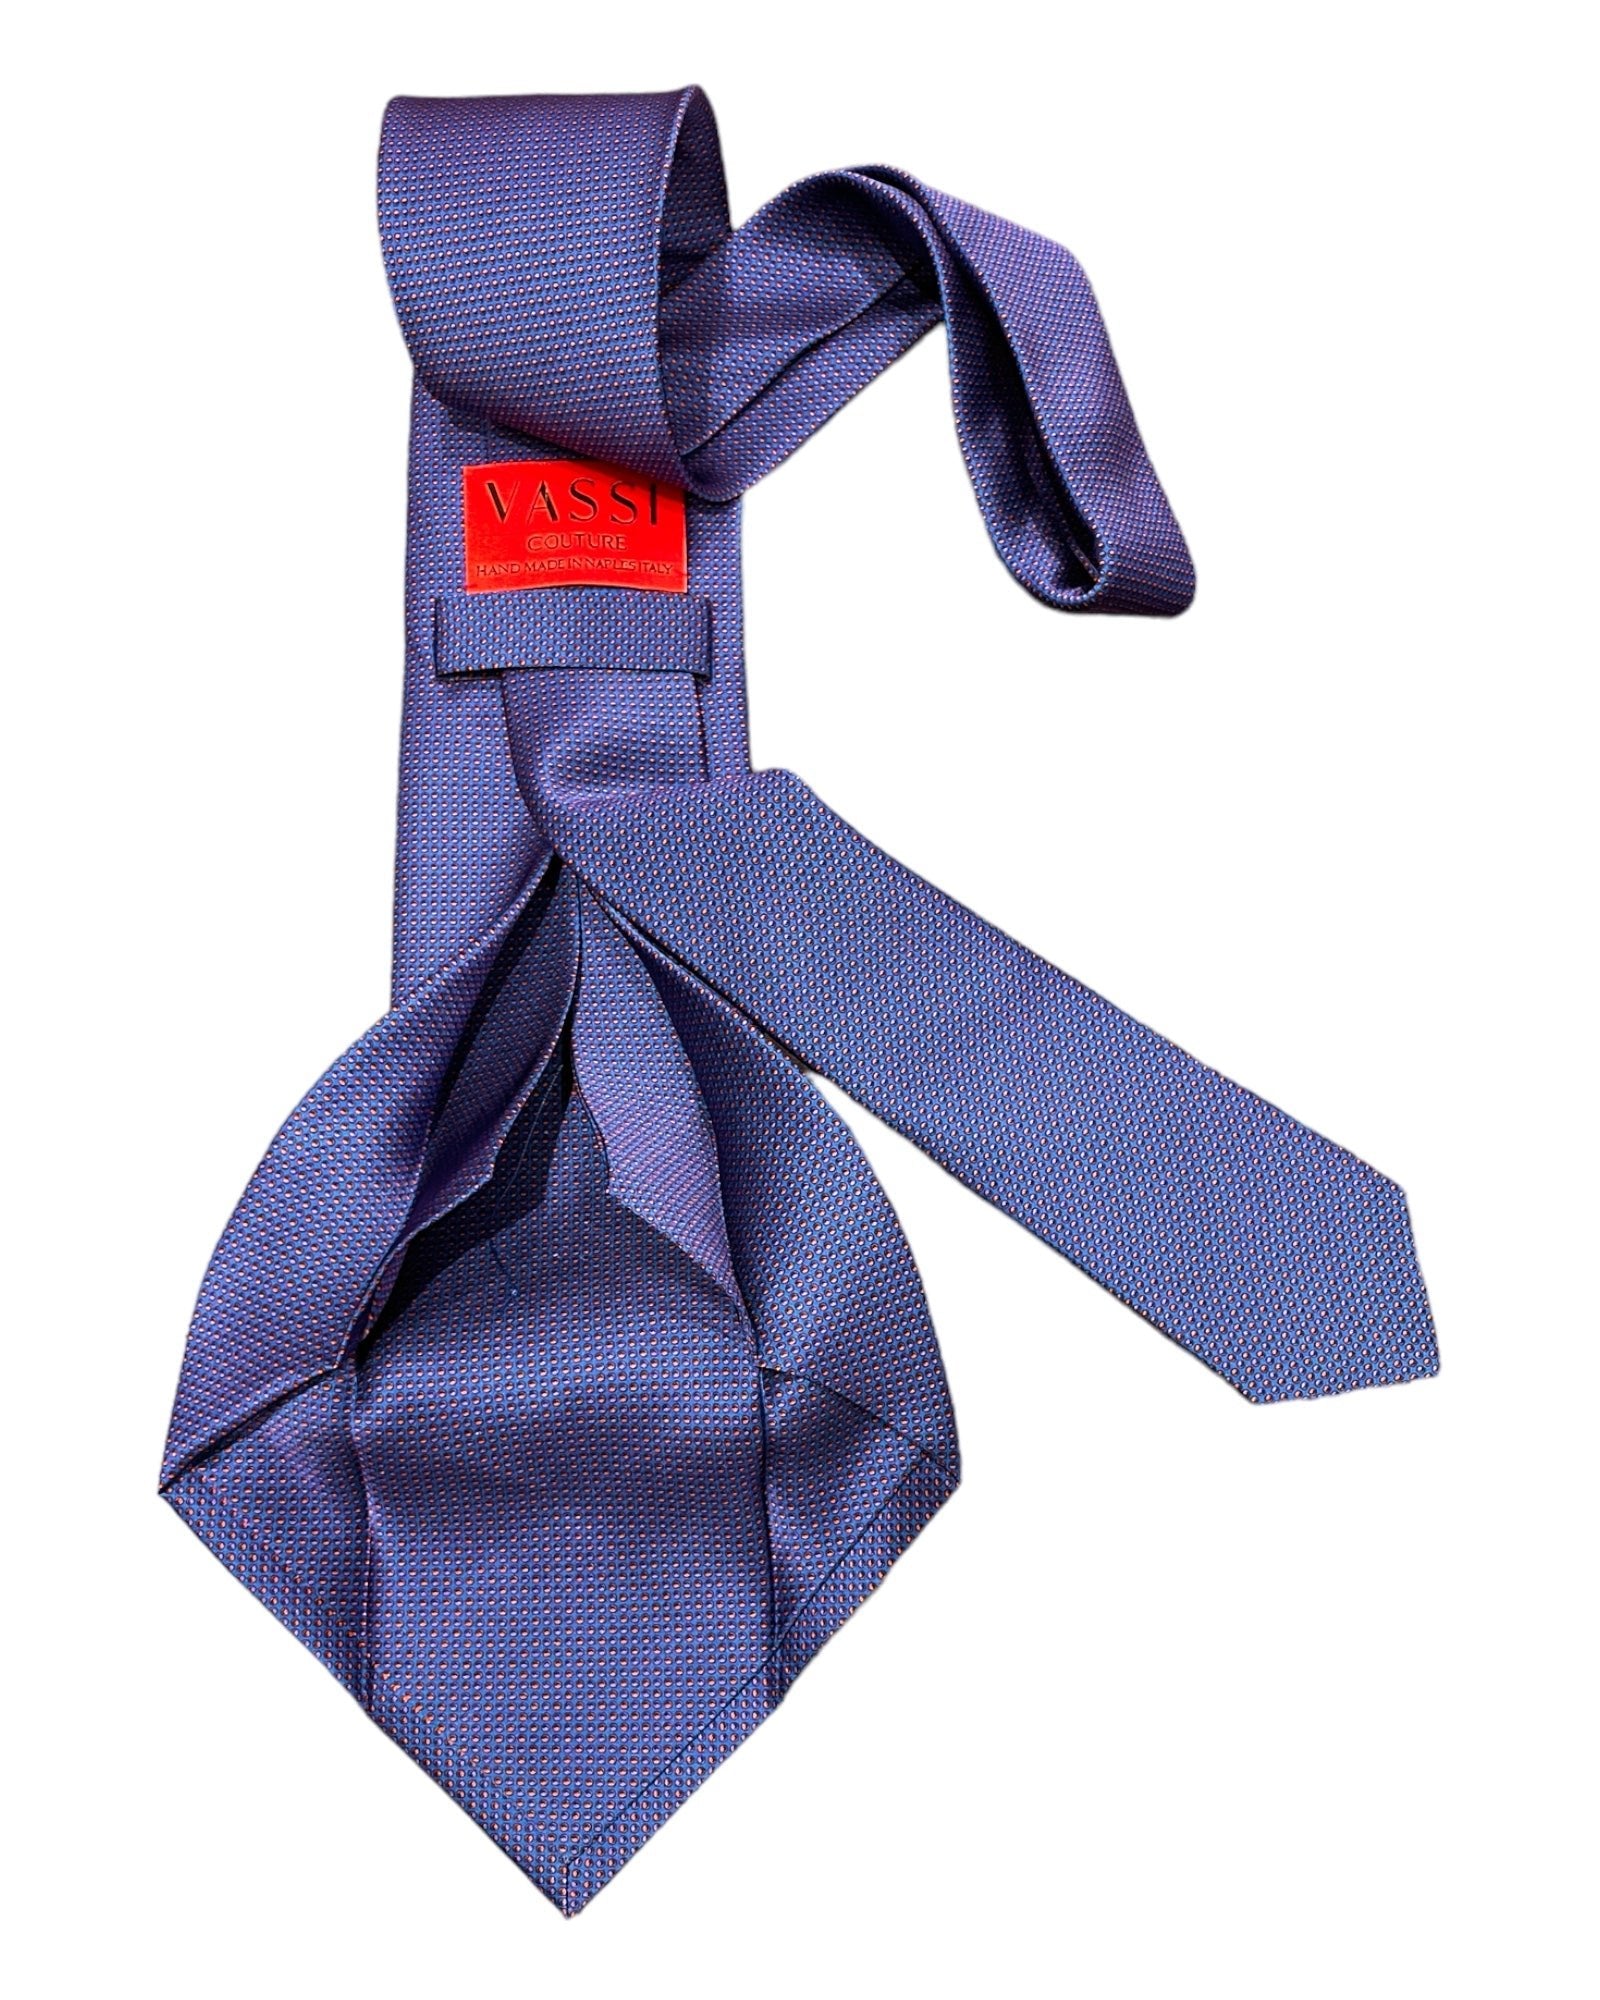 Indigo Blue with Micro Orange dots, Seven-Fold Silk Tie TIESIndigo